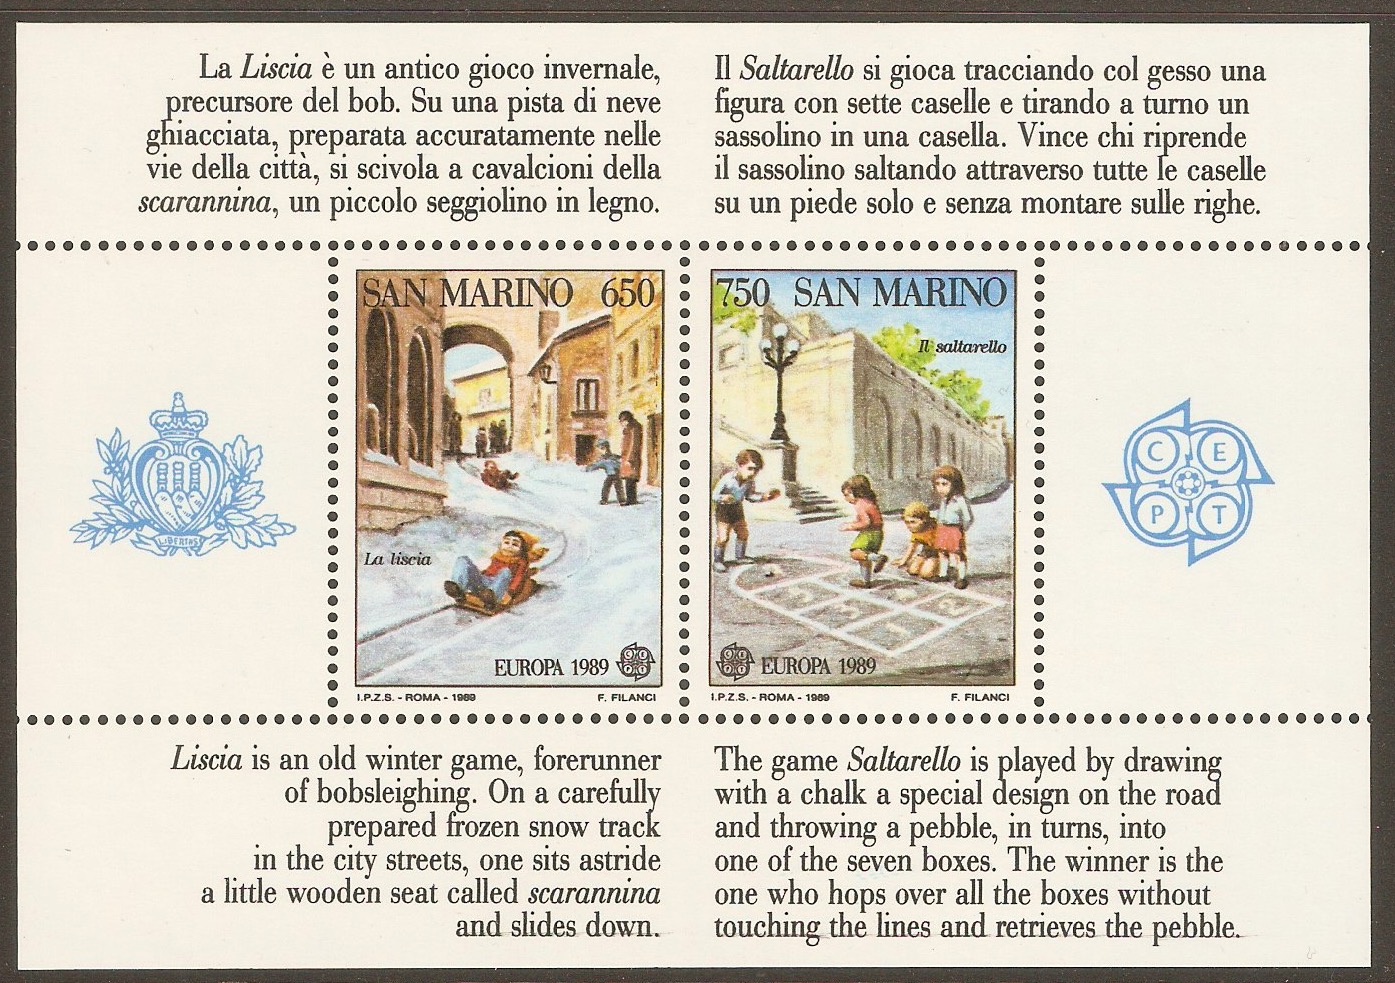 San Marino 1989 Europa - Children's Games sheet. SGMS1339.